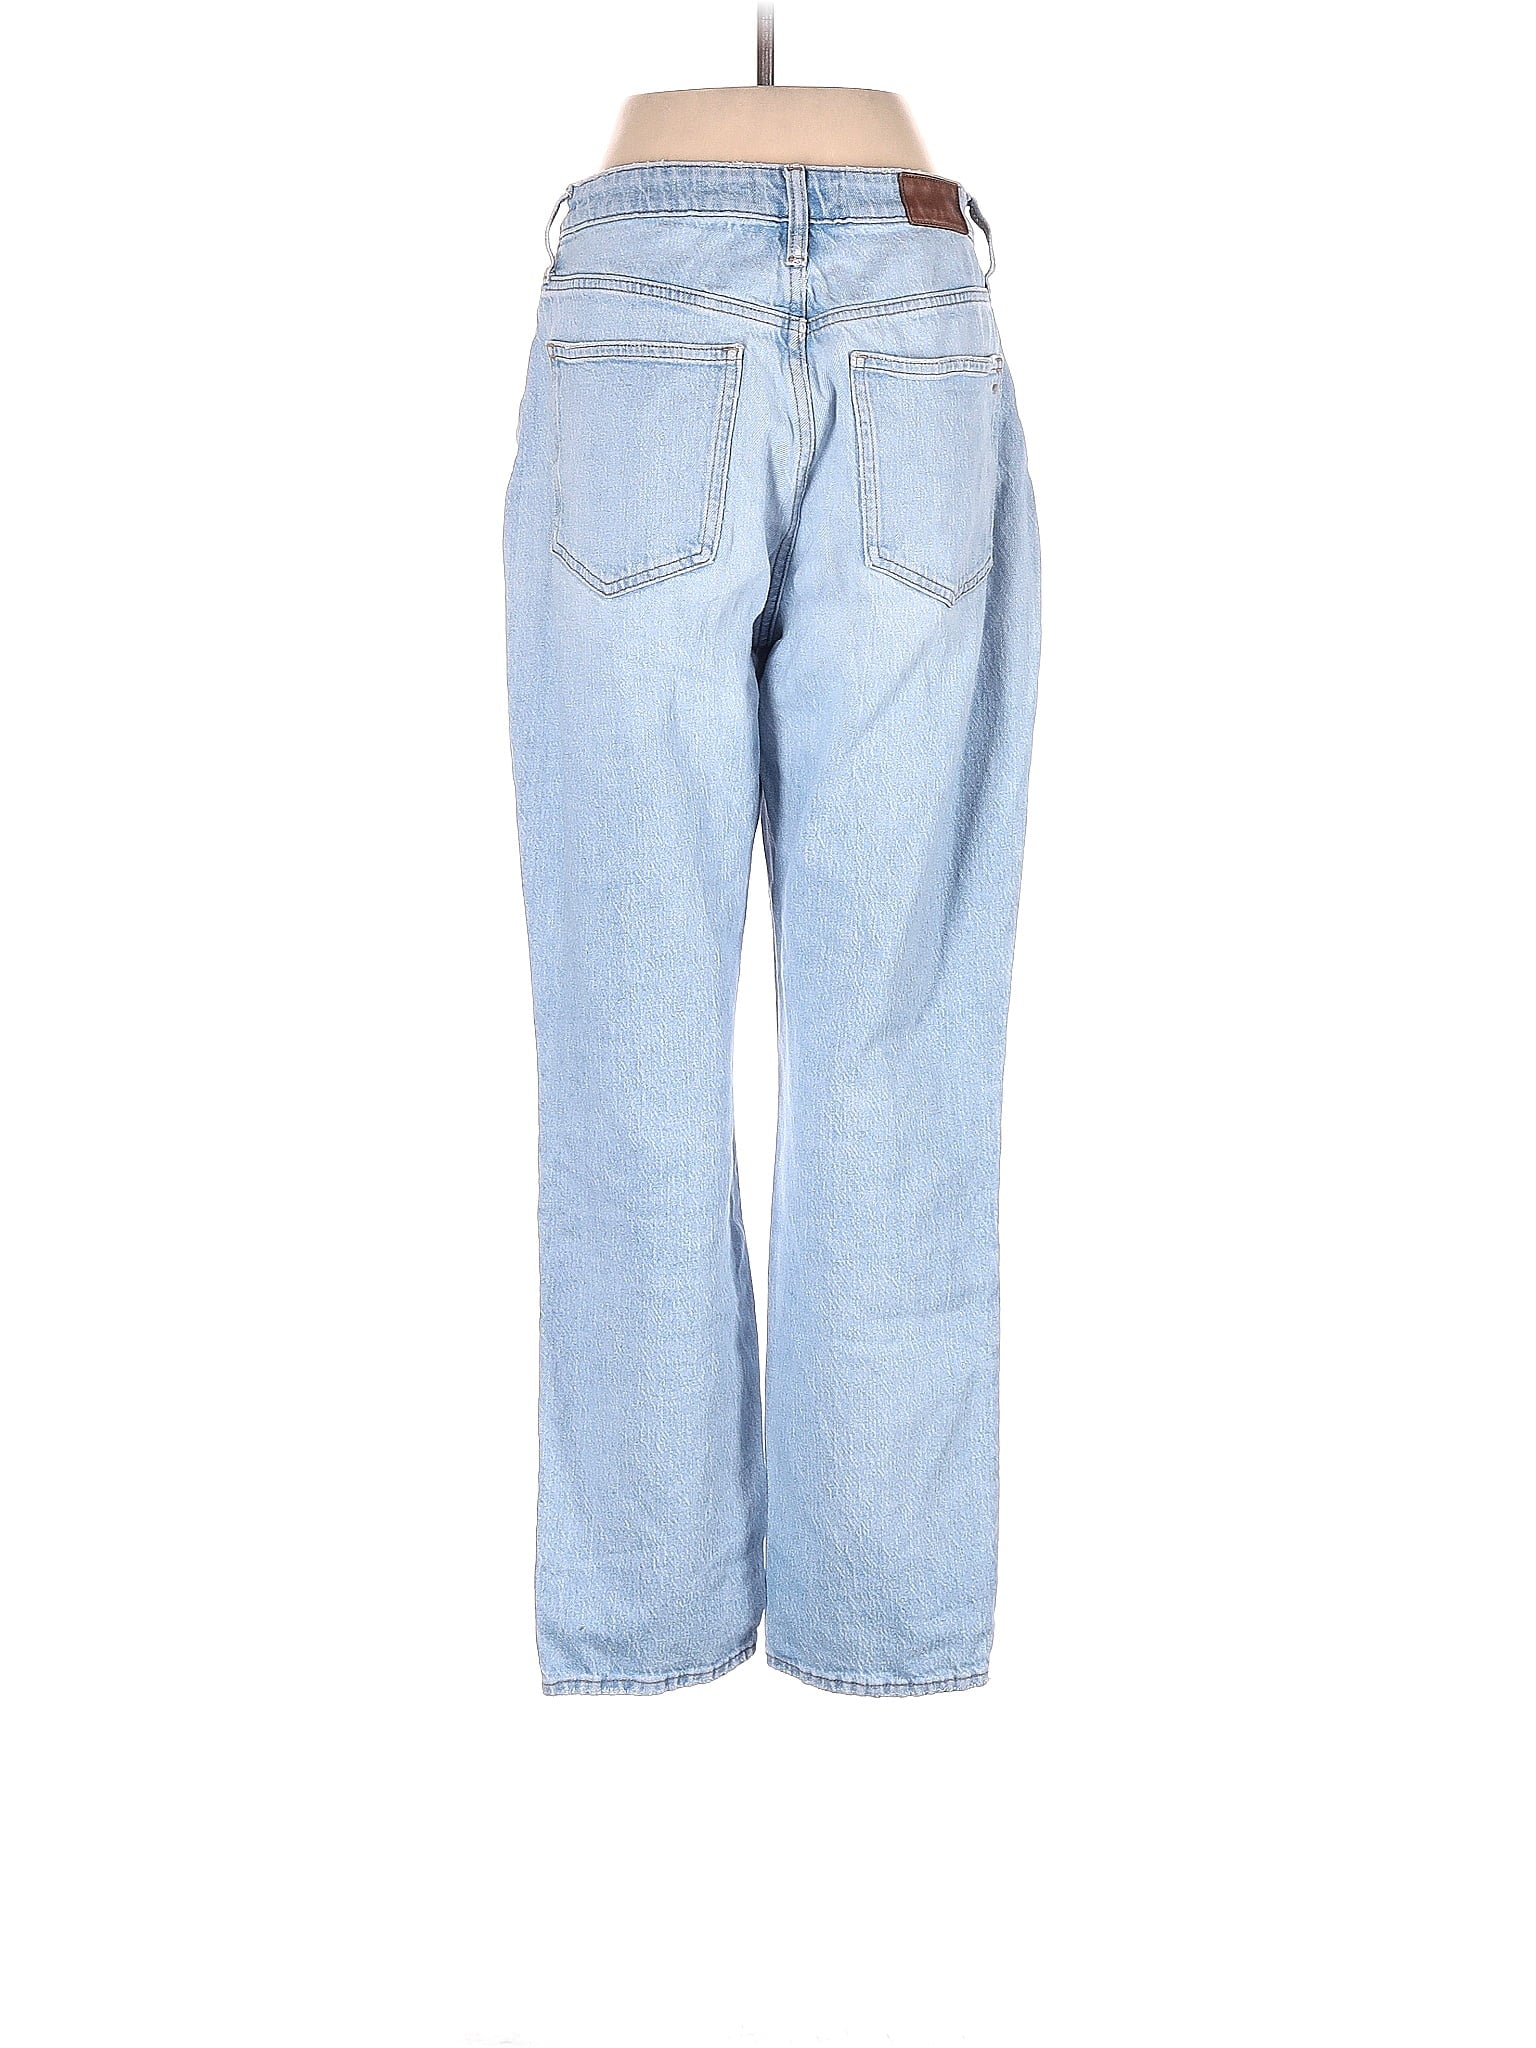 High-Rise Boyjeans Jeans in Light Wash waist size - 28 T